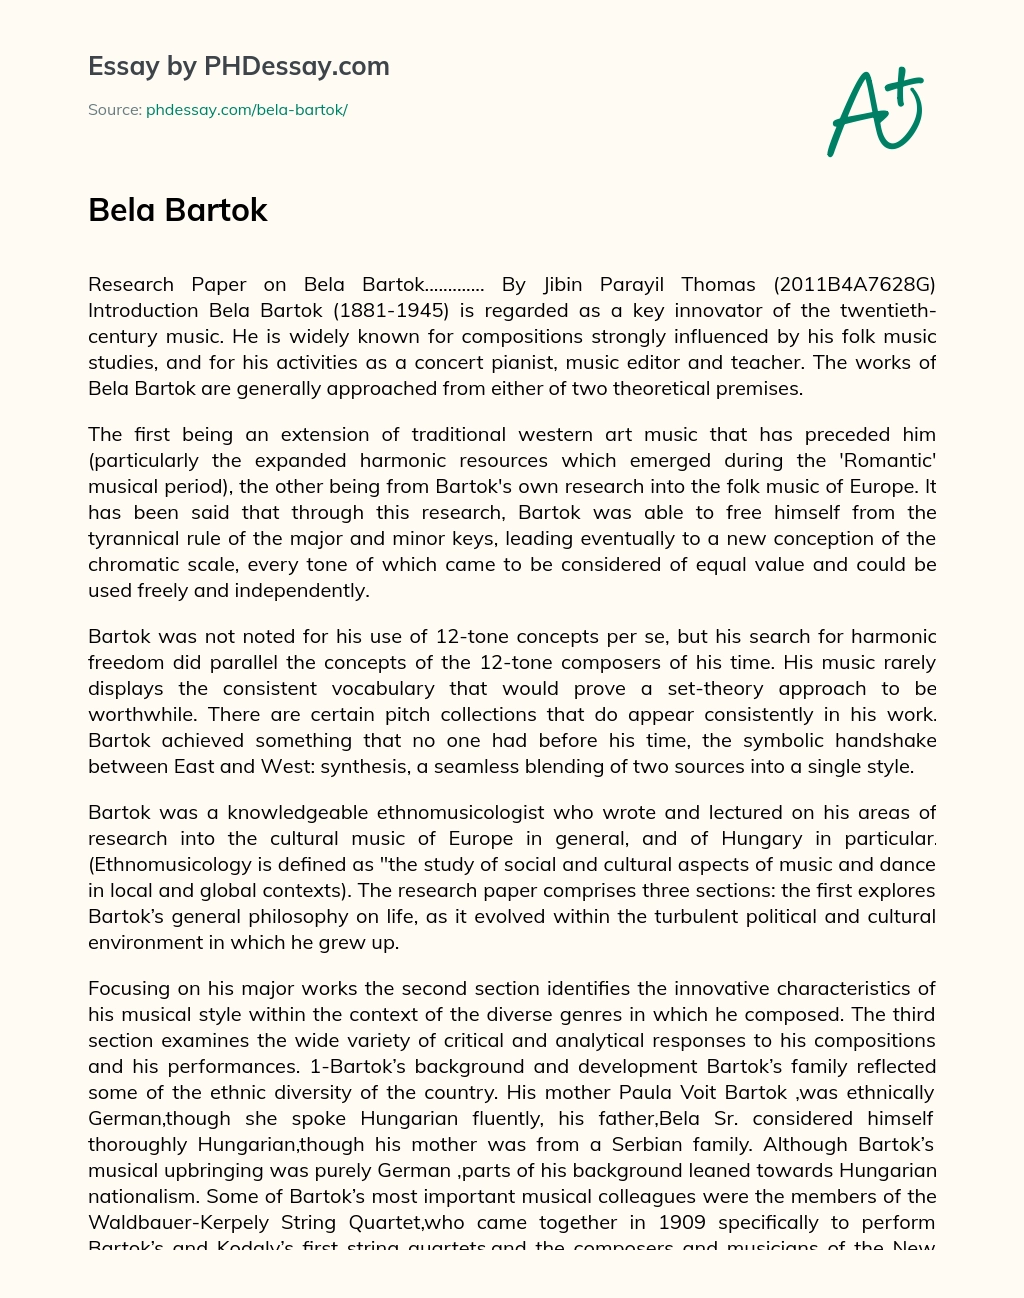 Exploring the Musical Innovations of Bela Bartok through Folk Music and Harmonic Freedom essay